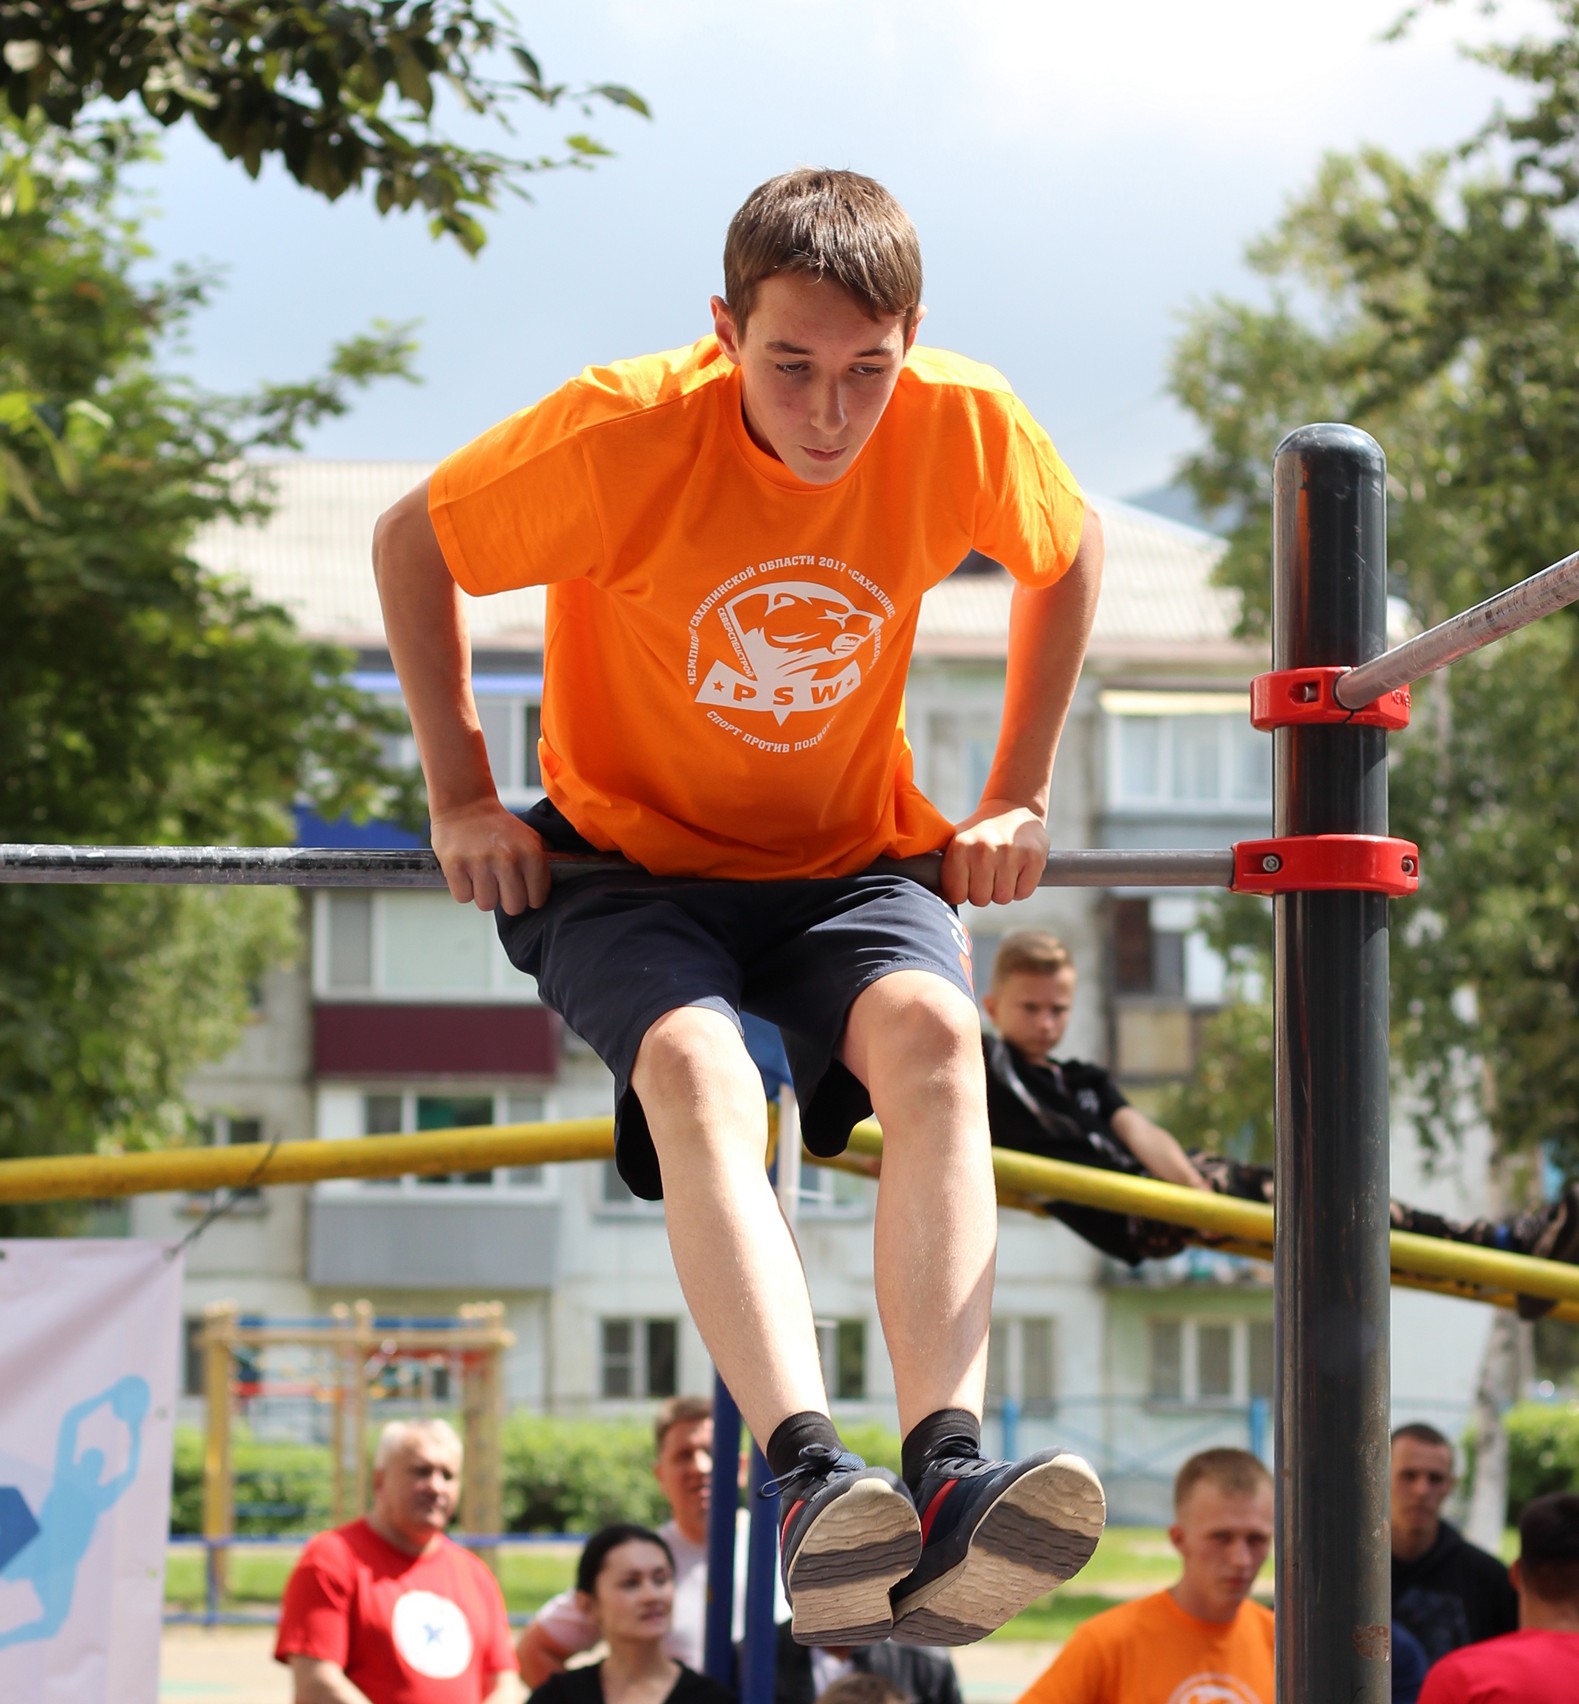 III чемпионат дворового спорта островного региона «Сахалинский WORKOUT»